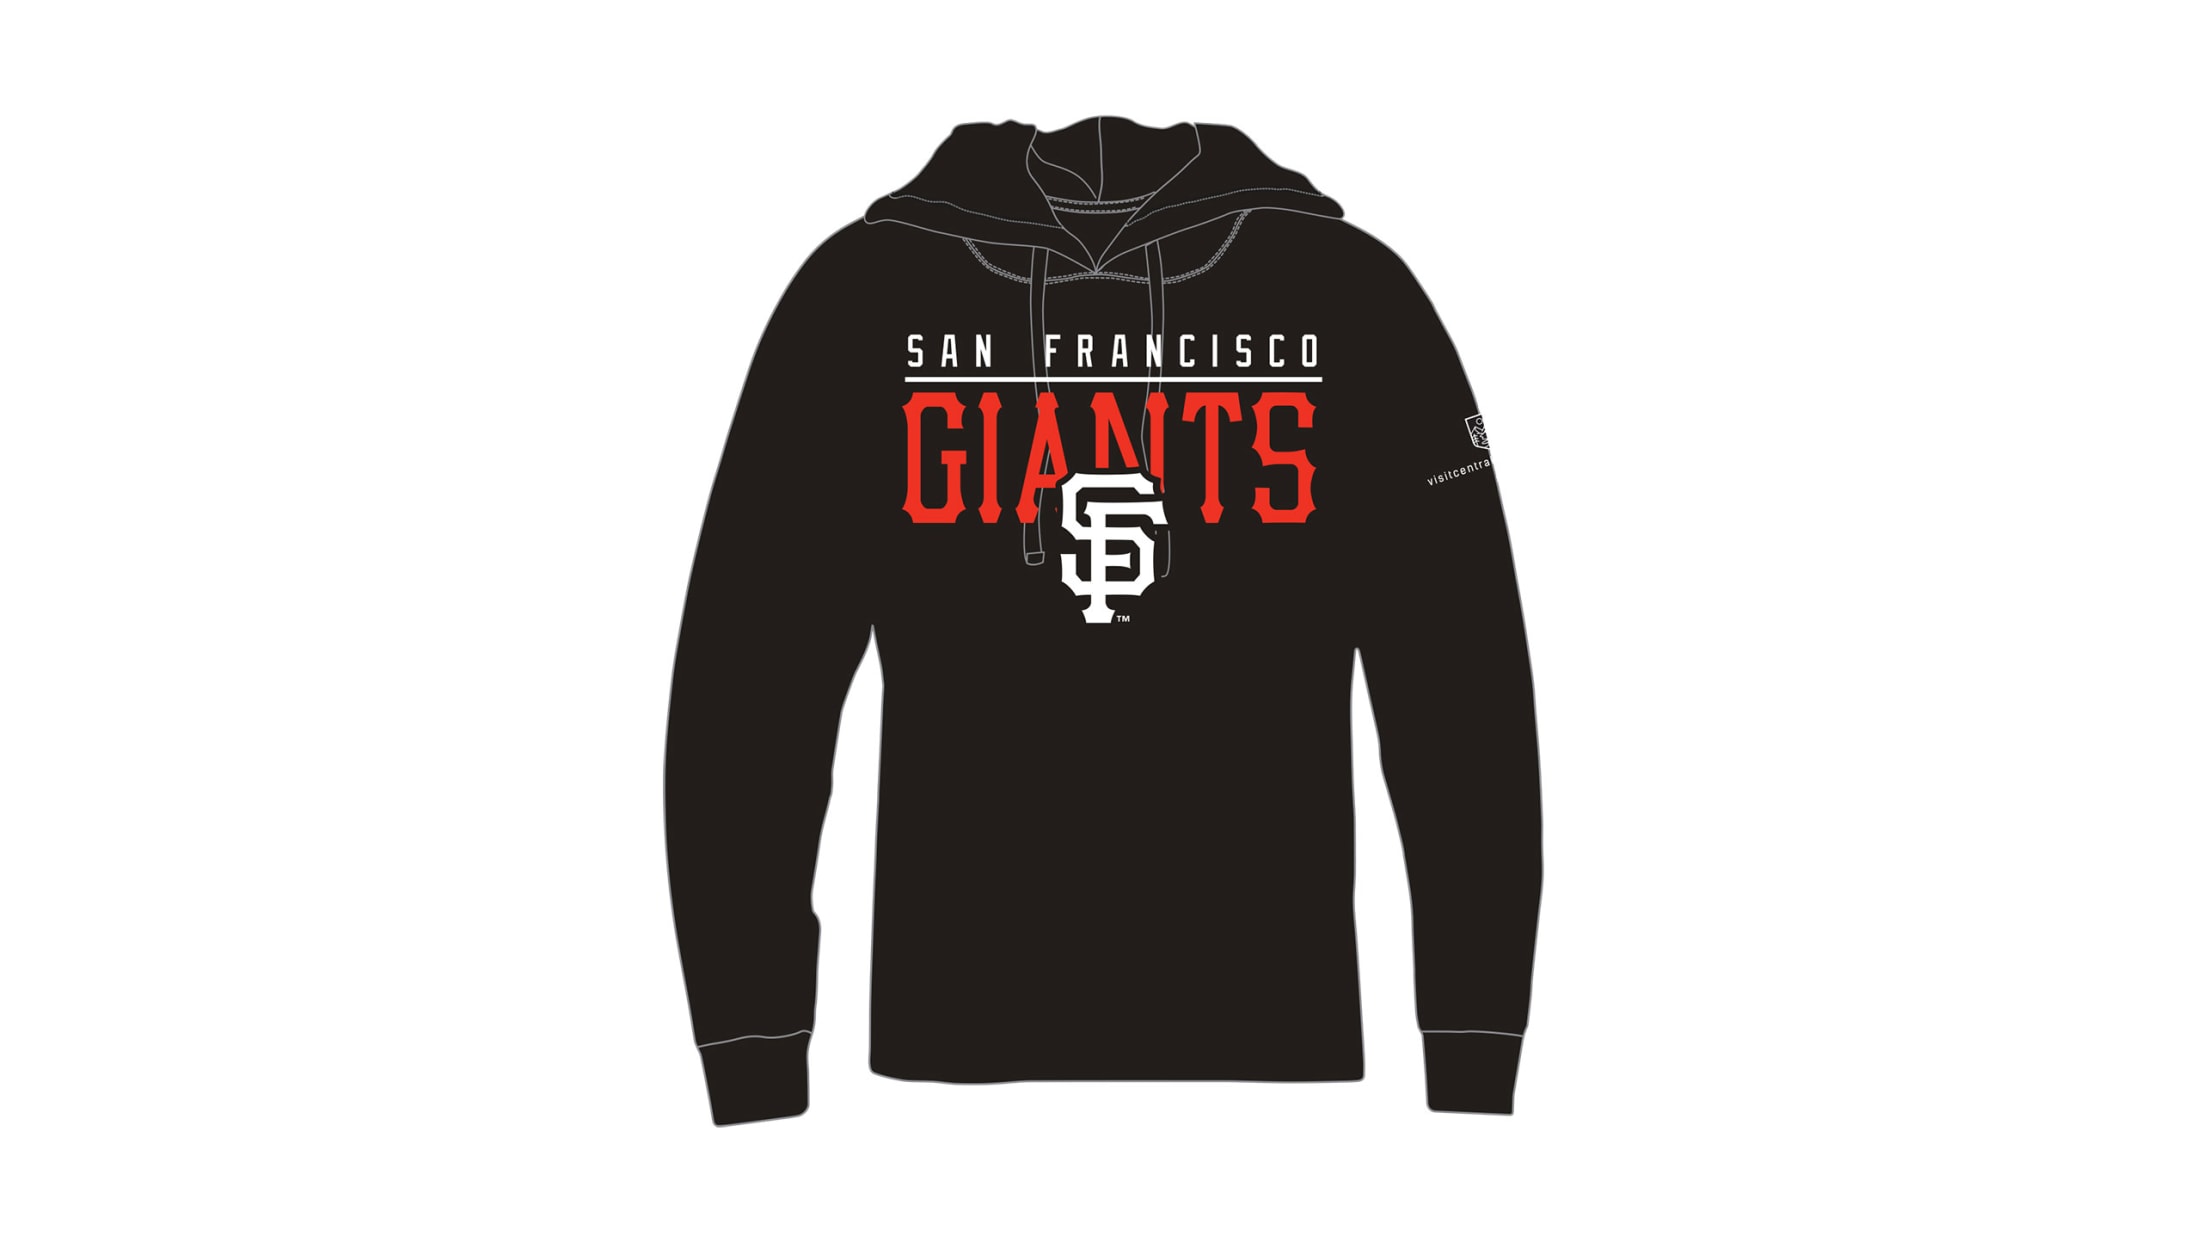 Promotions & Giveaways Images San Francisco Giants